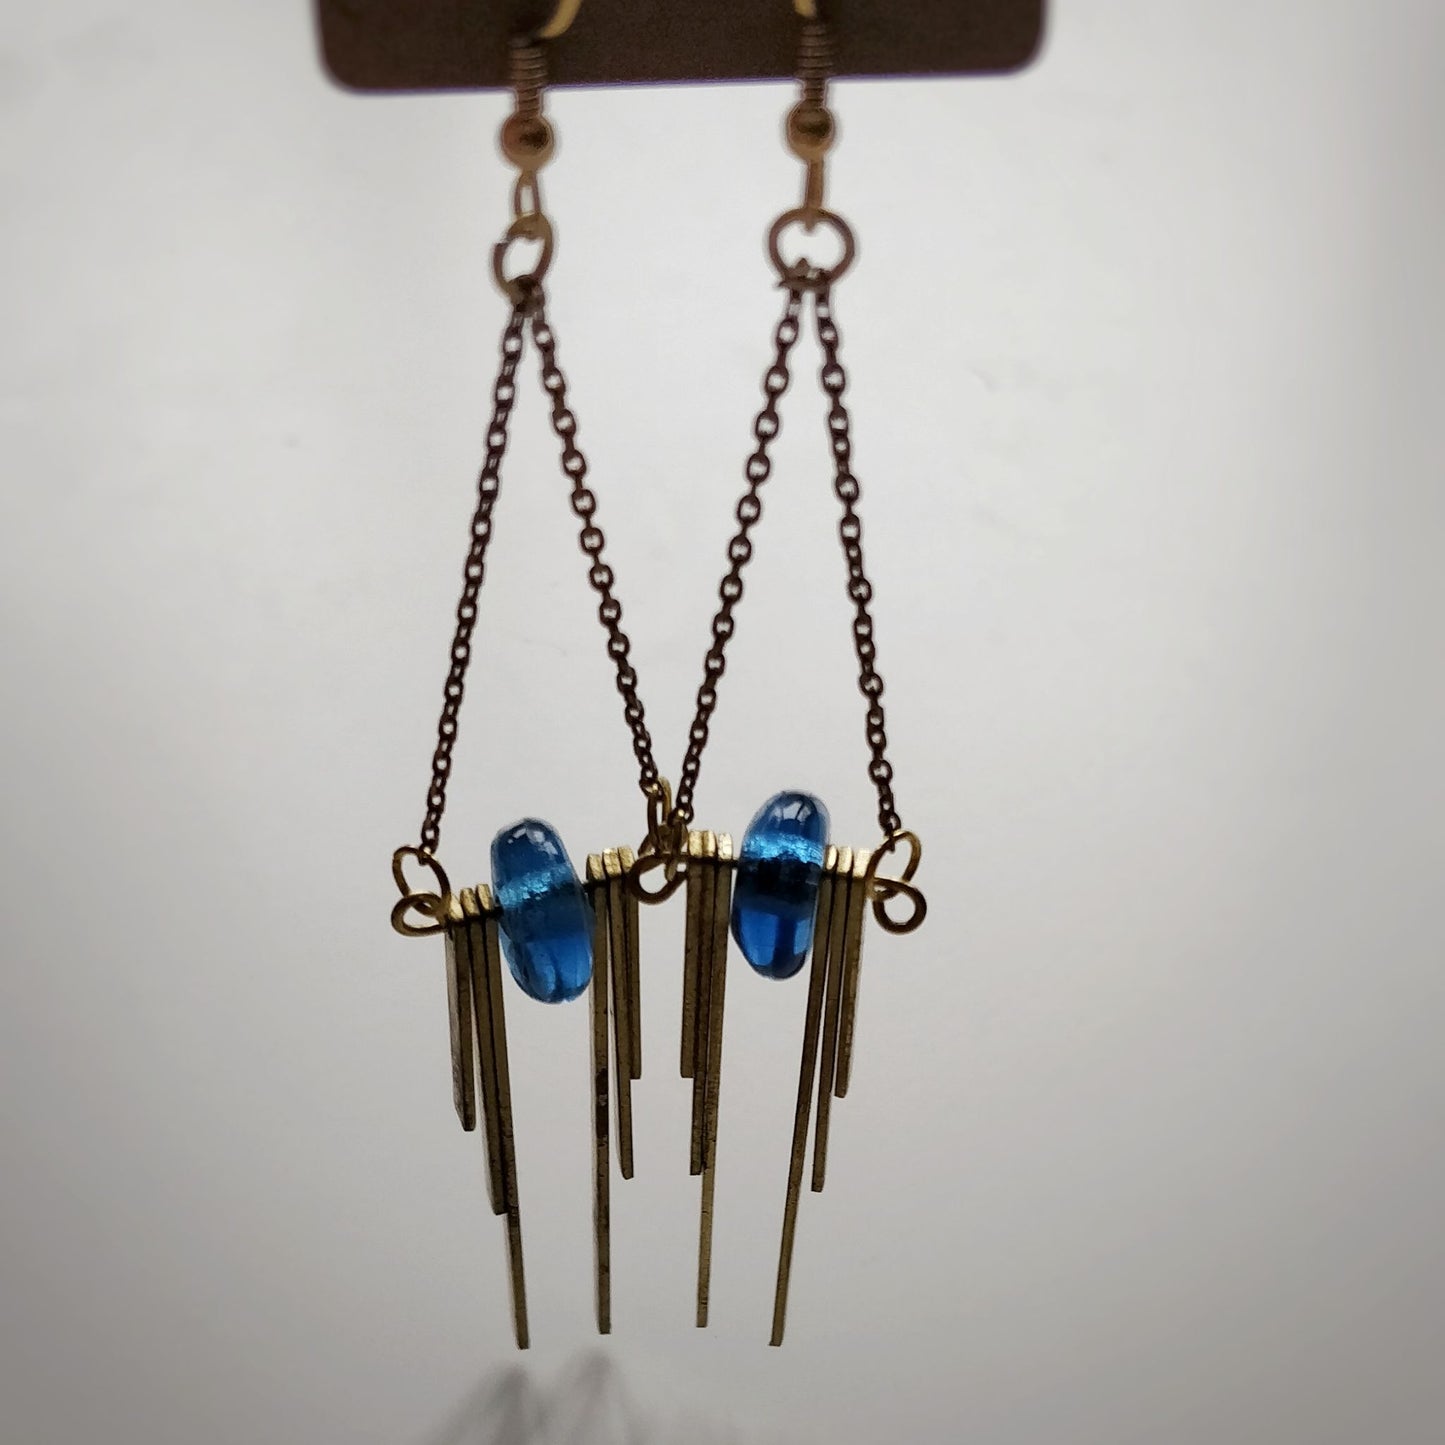 Kioo Hanging Bead and Brass Earrings  Handmade and Fair Trade - hanging